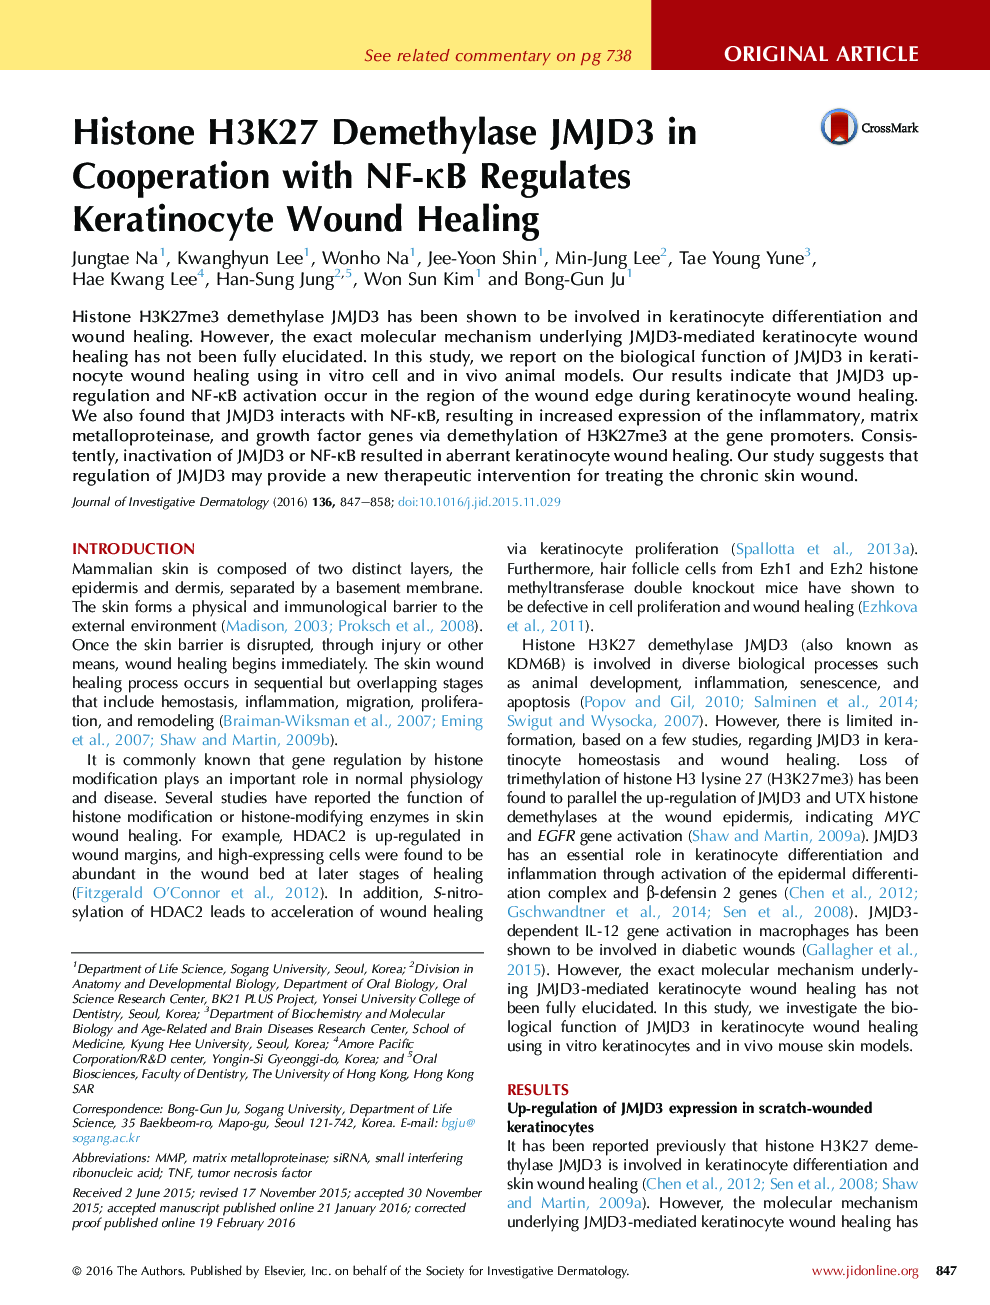 Original ArticleWound HealingHistone H3K27 Demethylase JMJD3 in Cooperation with NF-ÎºB Regulates Keratinocyte Wound Healing